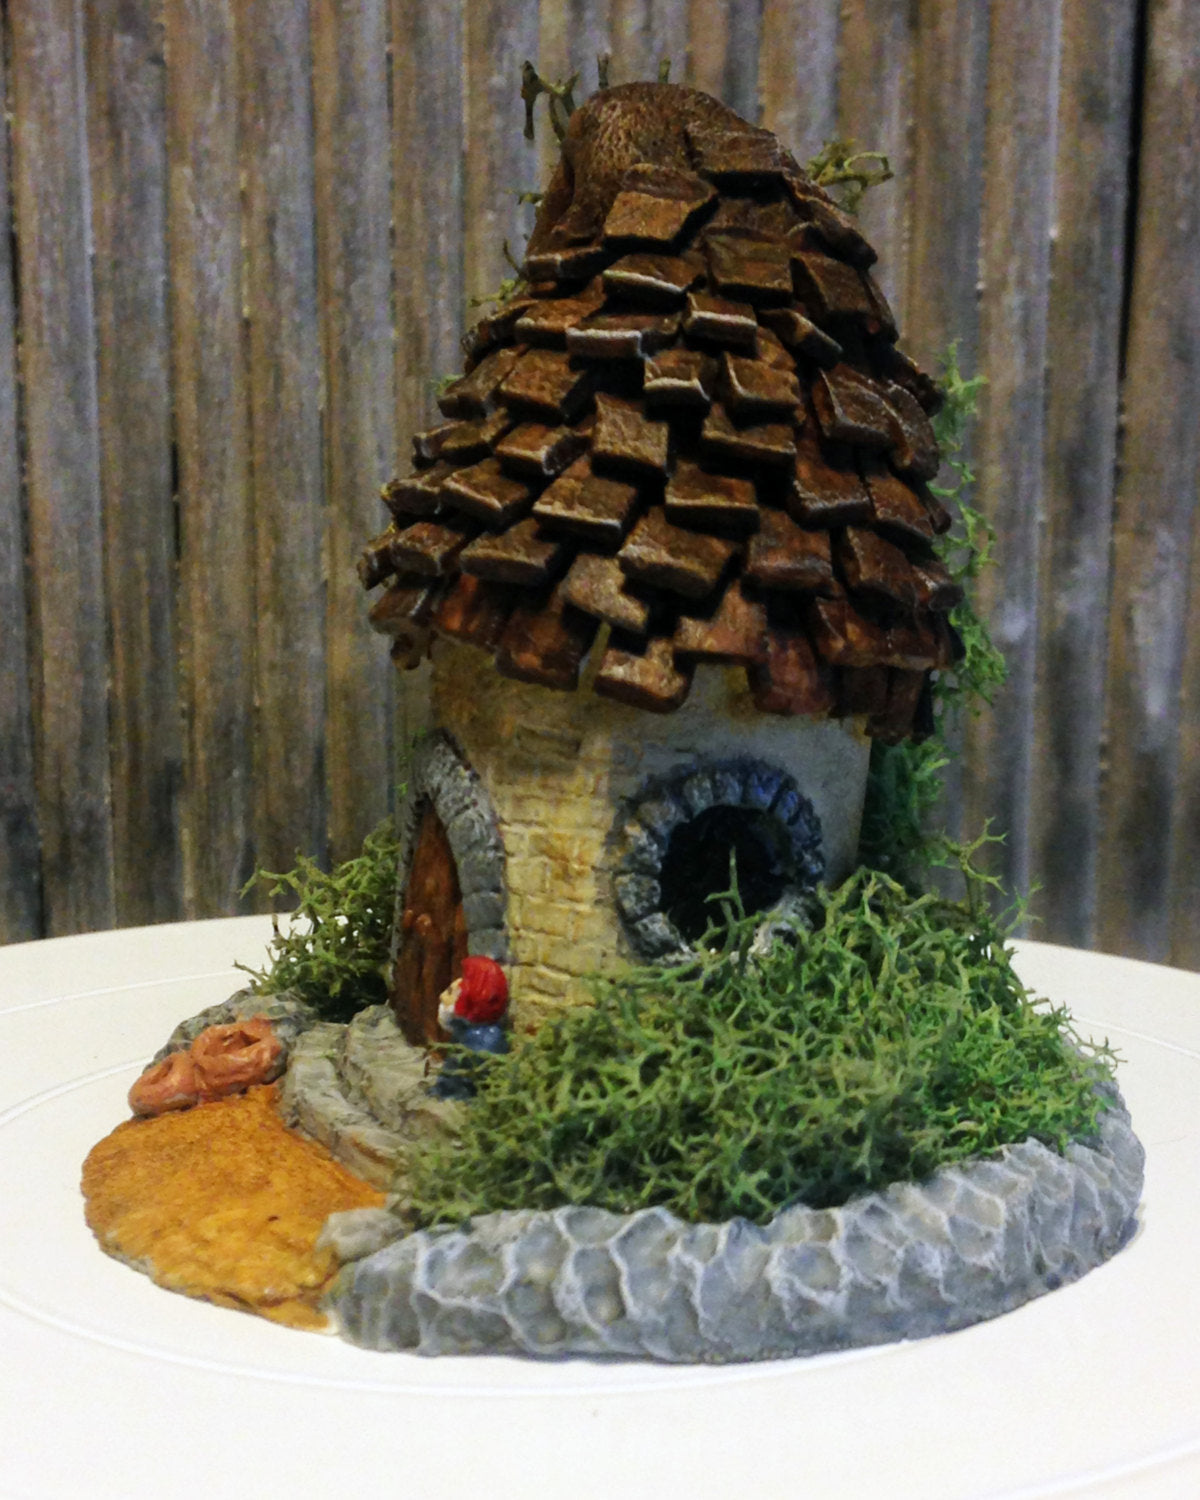 Miniature Polymer Clay Fairy Garden-One-of-a-kind Miniature Fairy Garden in Glass Container